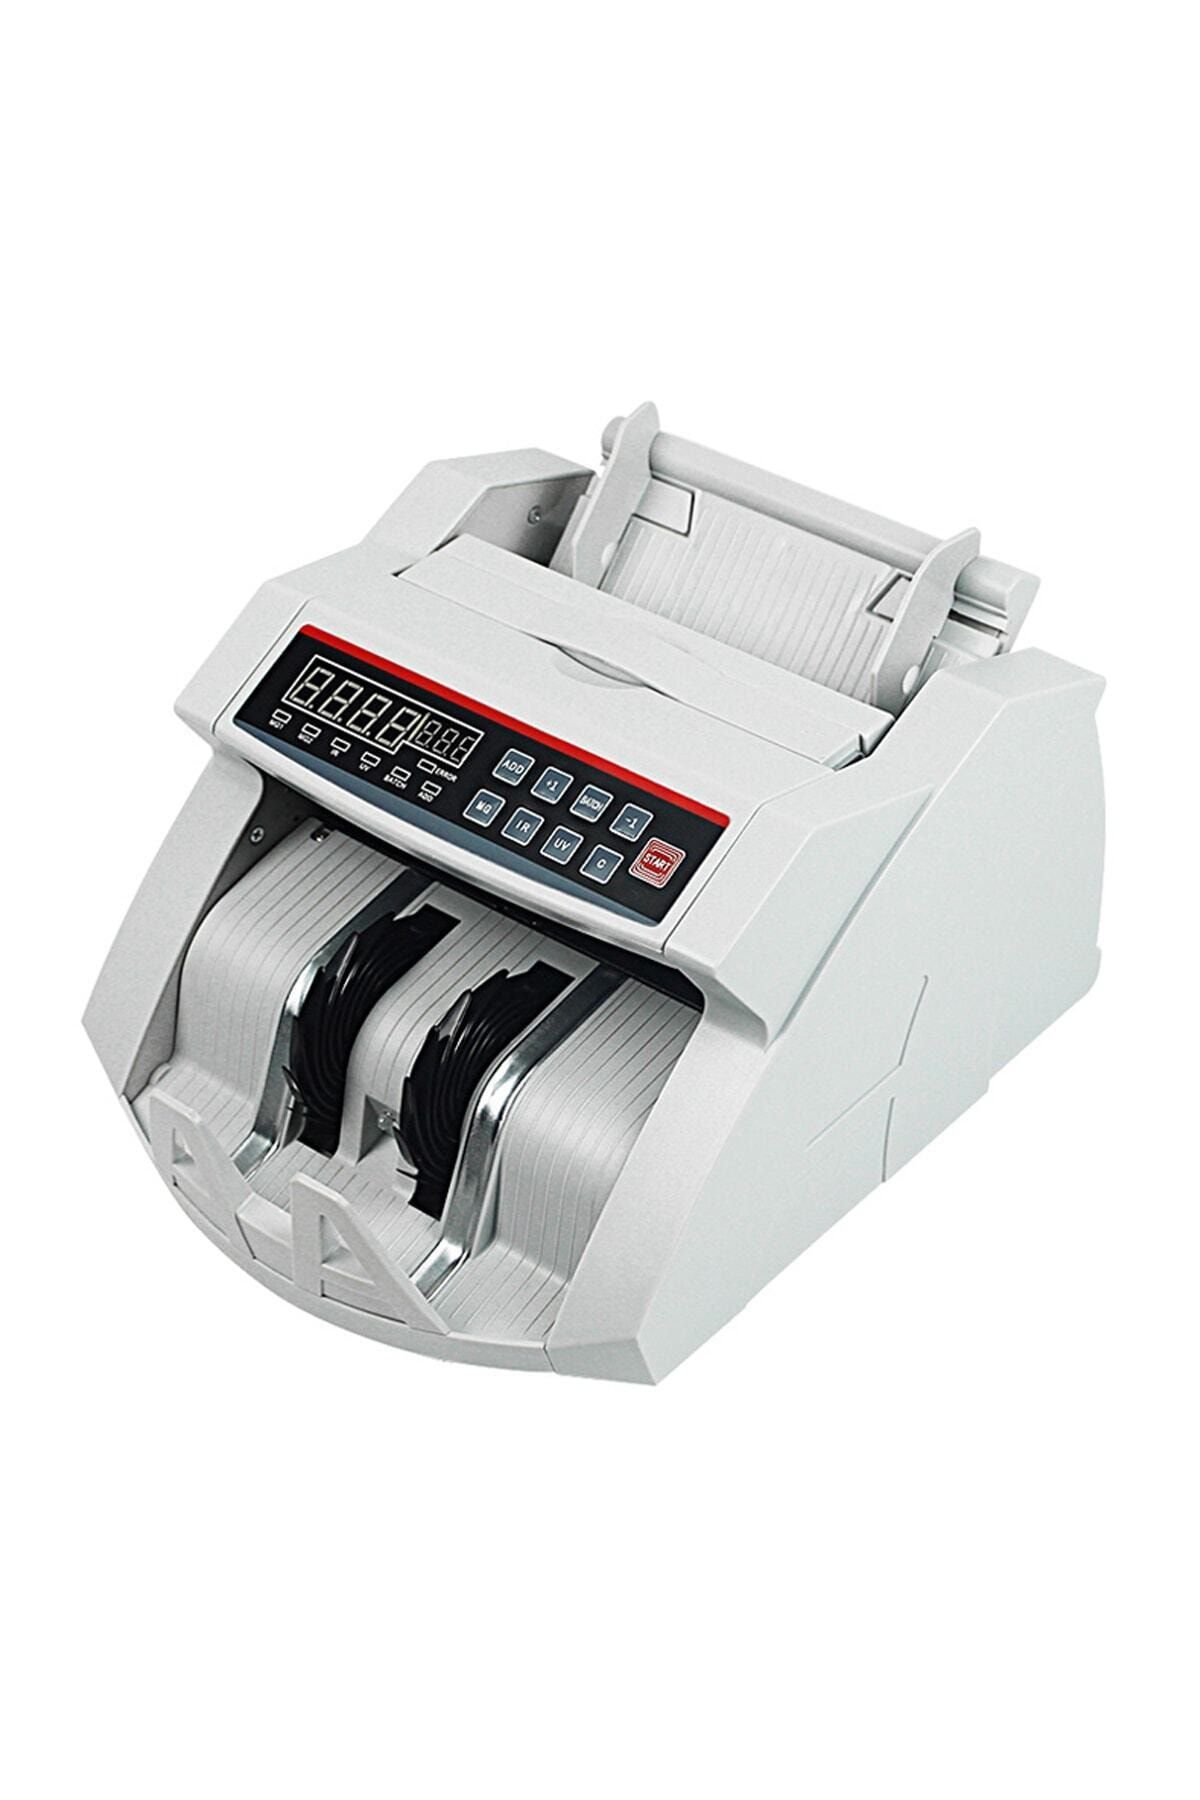 Gomax Para Sayma - Sahte Para Yakalama Makinası Ft-2060b Cash Counter